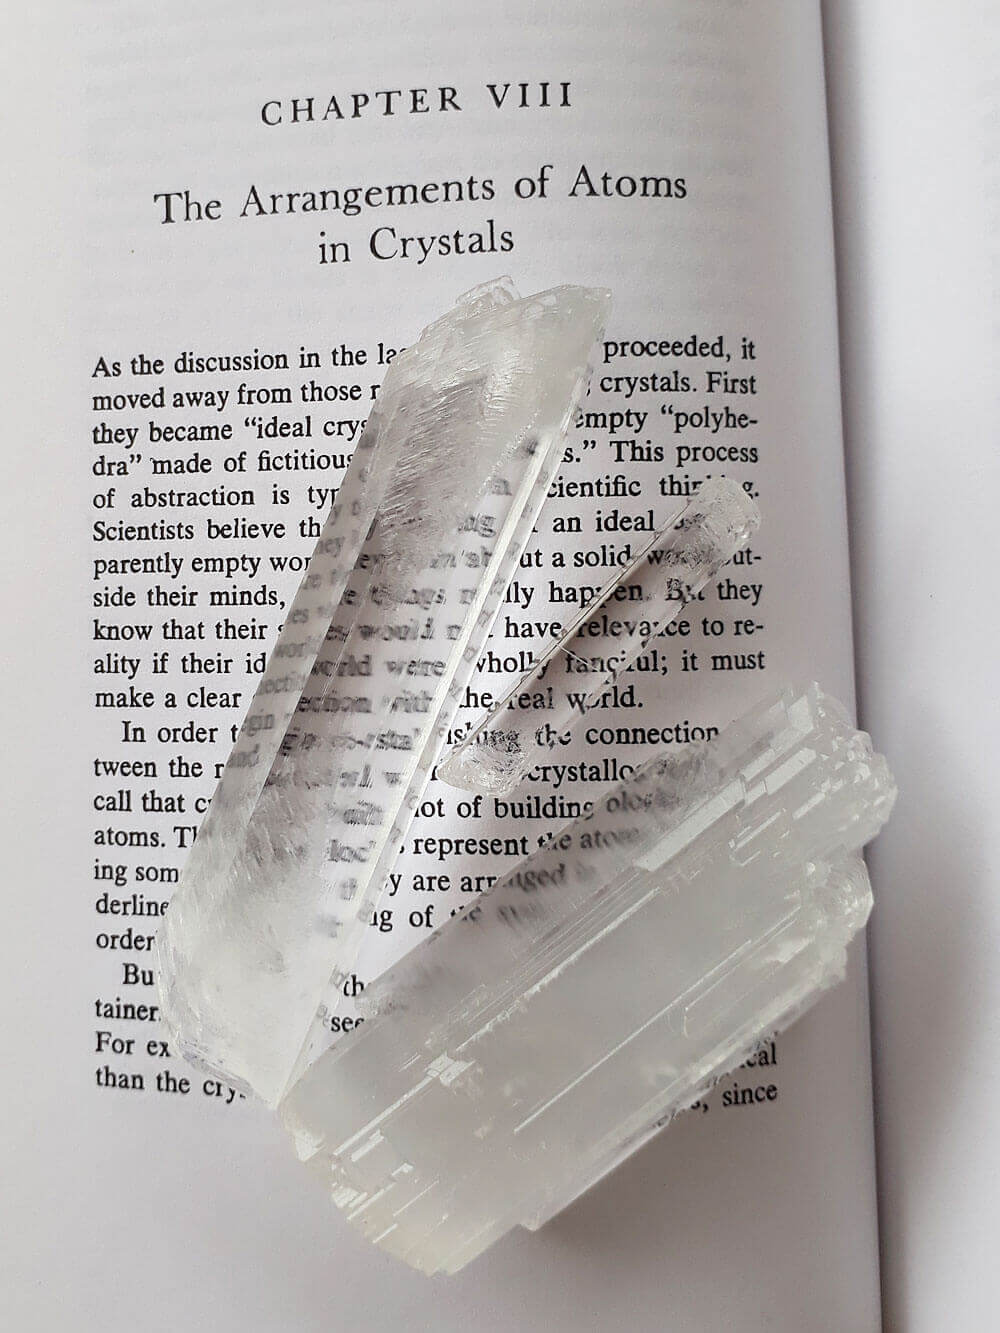 clarity of epsom salt crystals